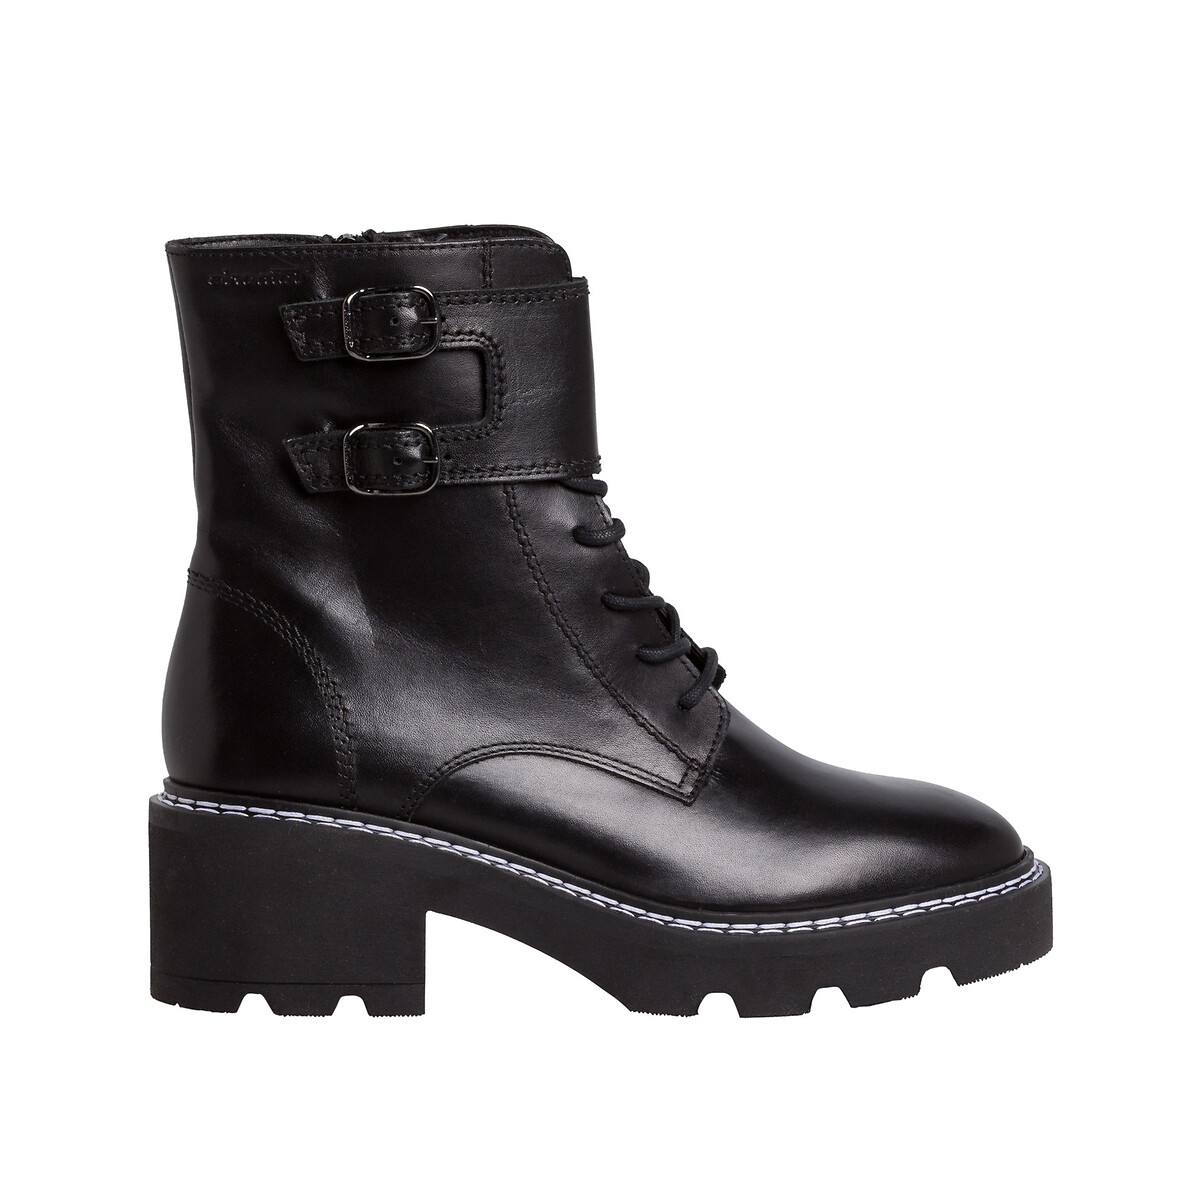 Leather ankle boots black Tamaris | La Redoute